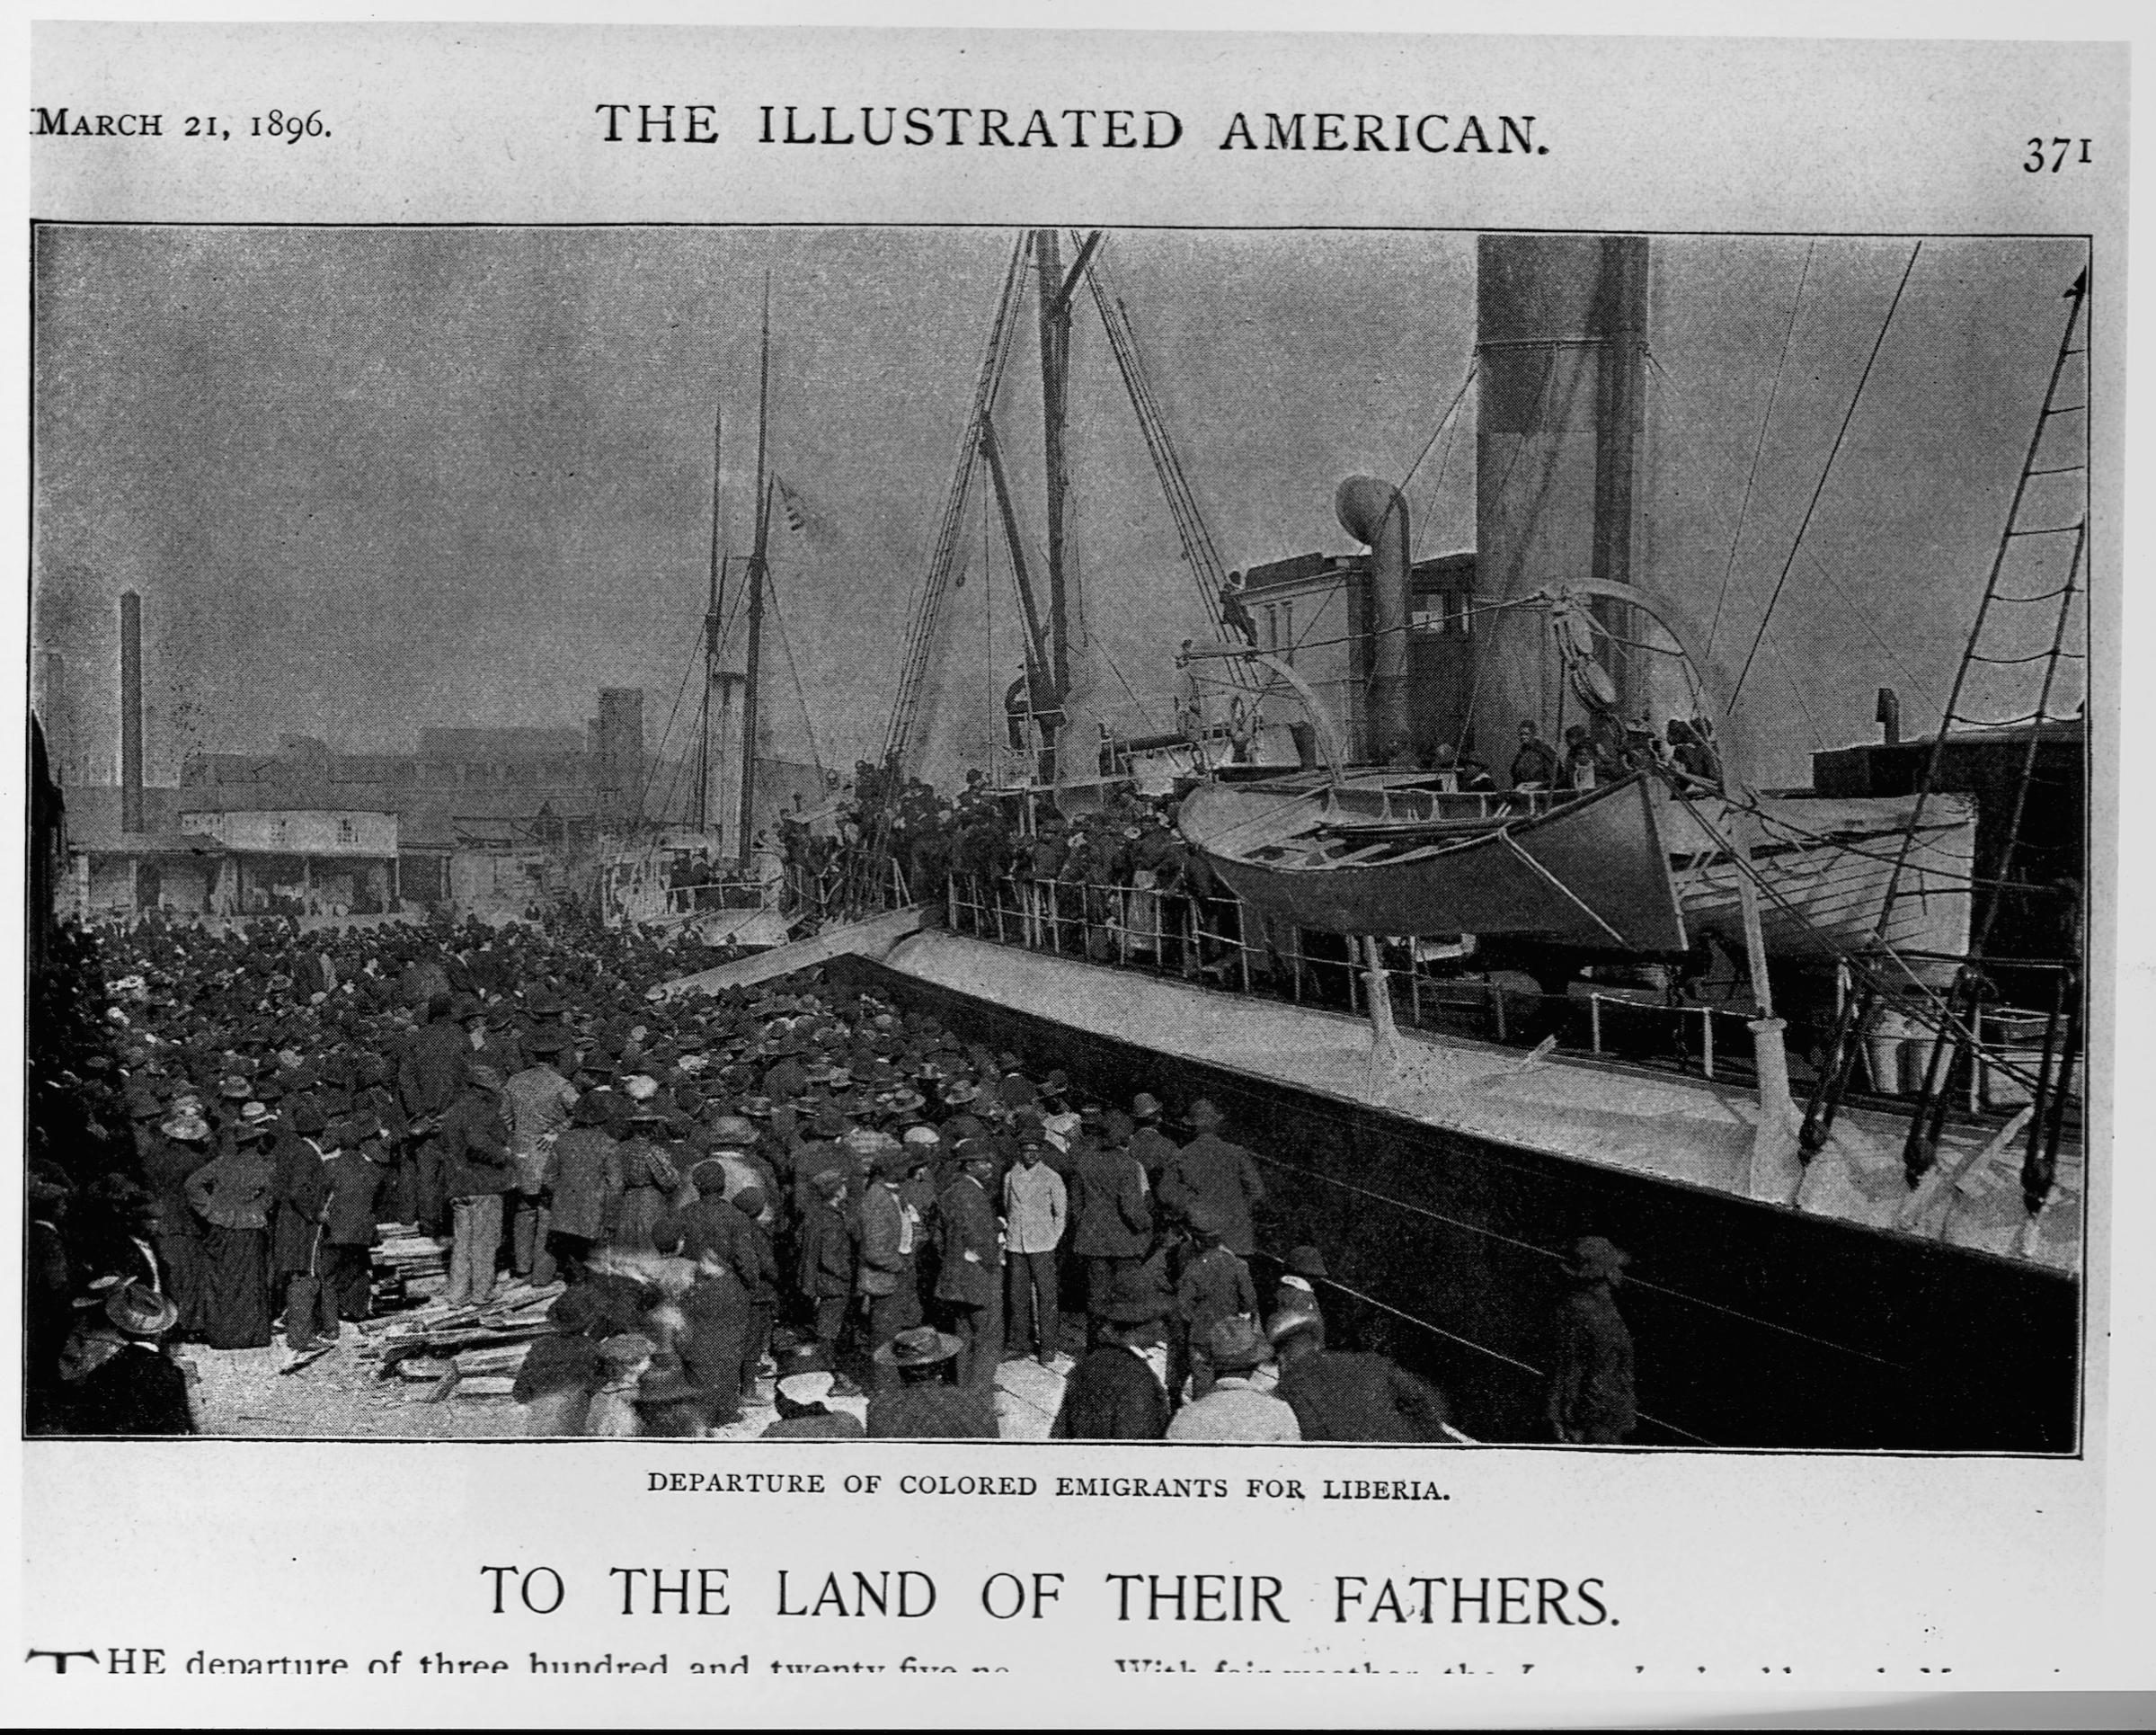 Emigrants Depart for Liberia